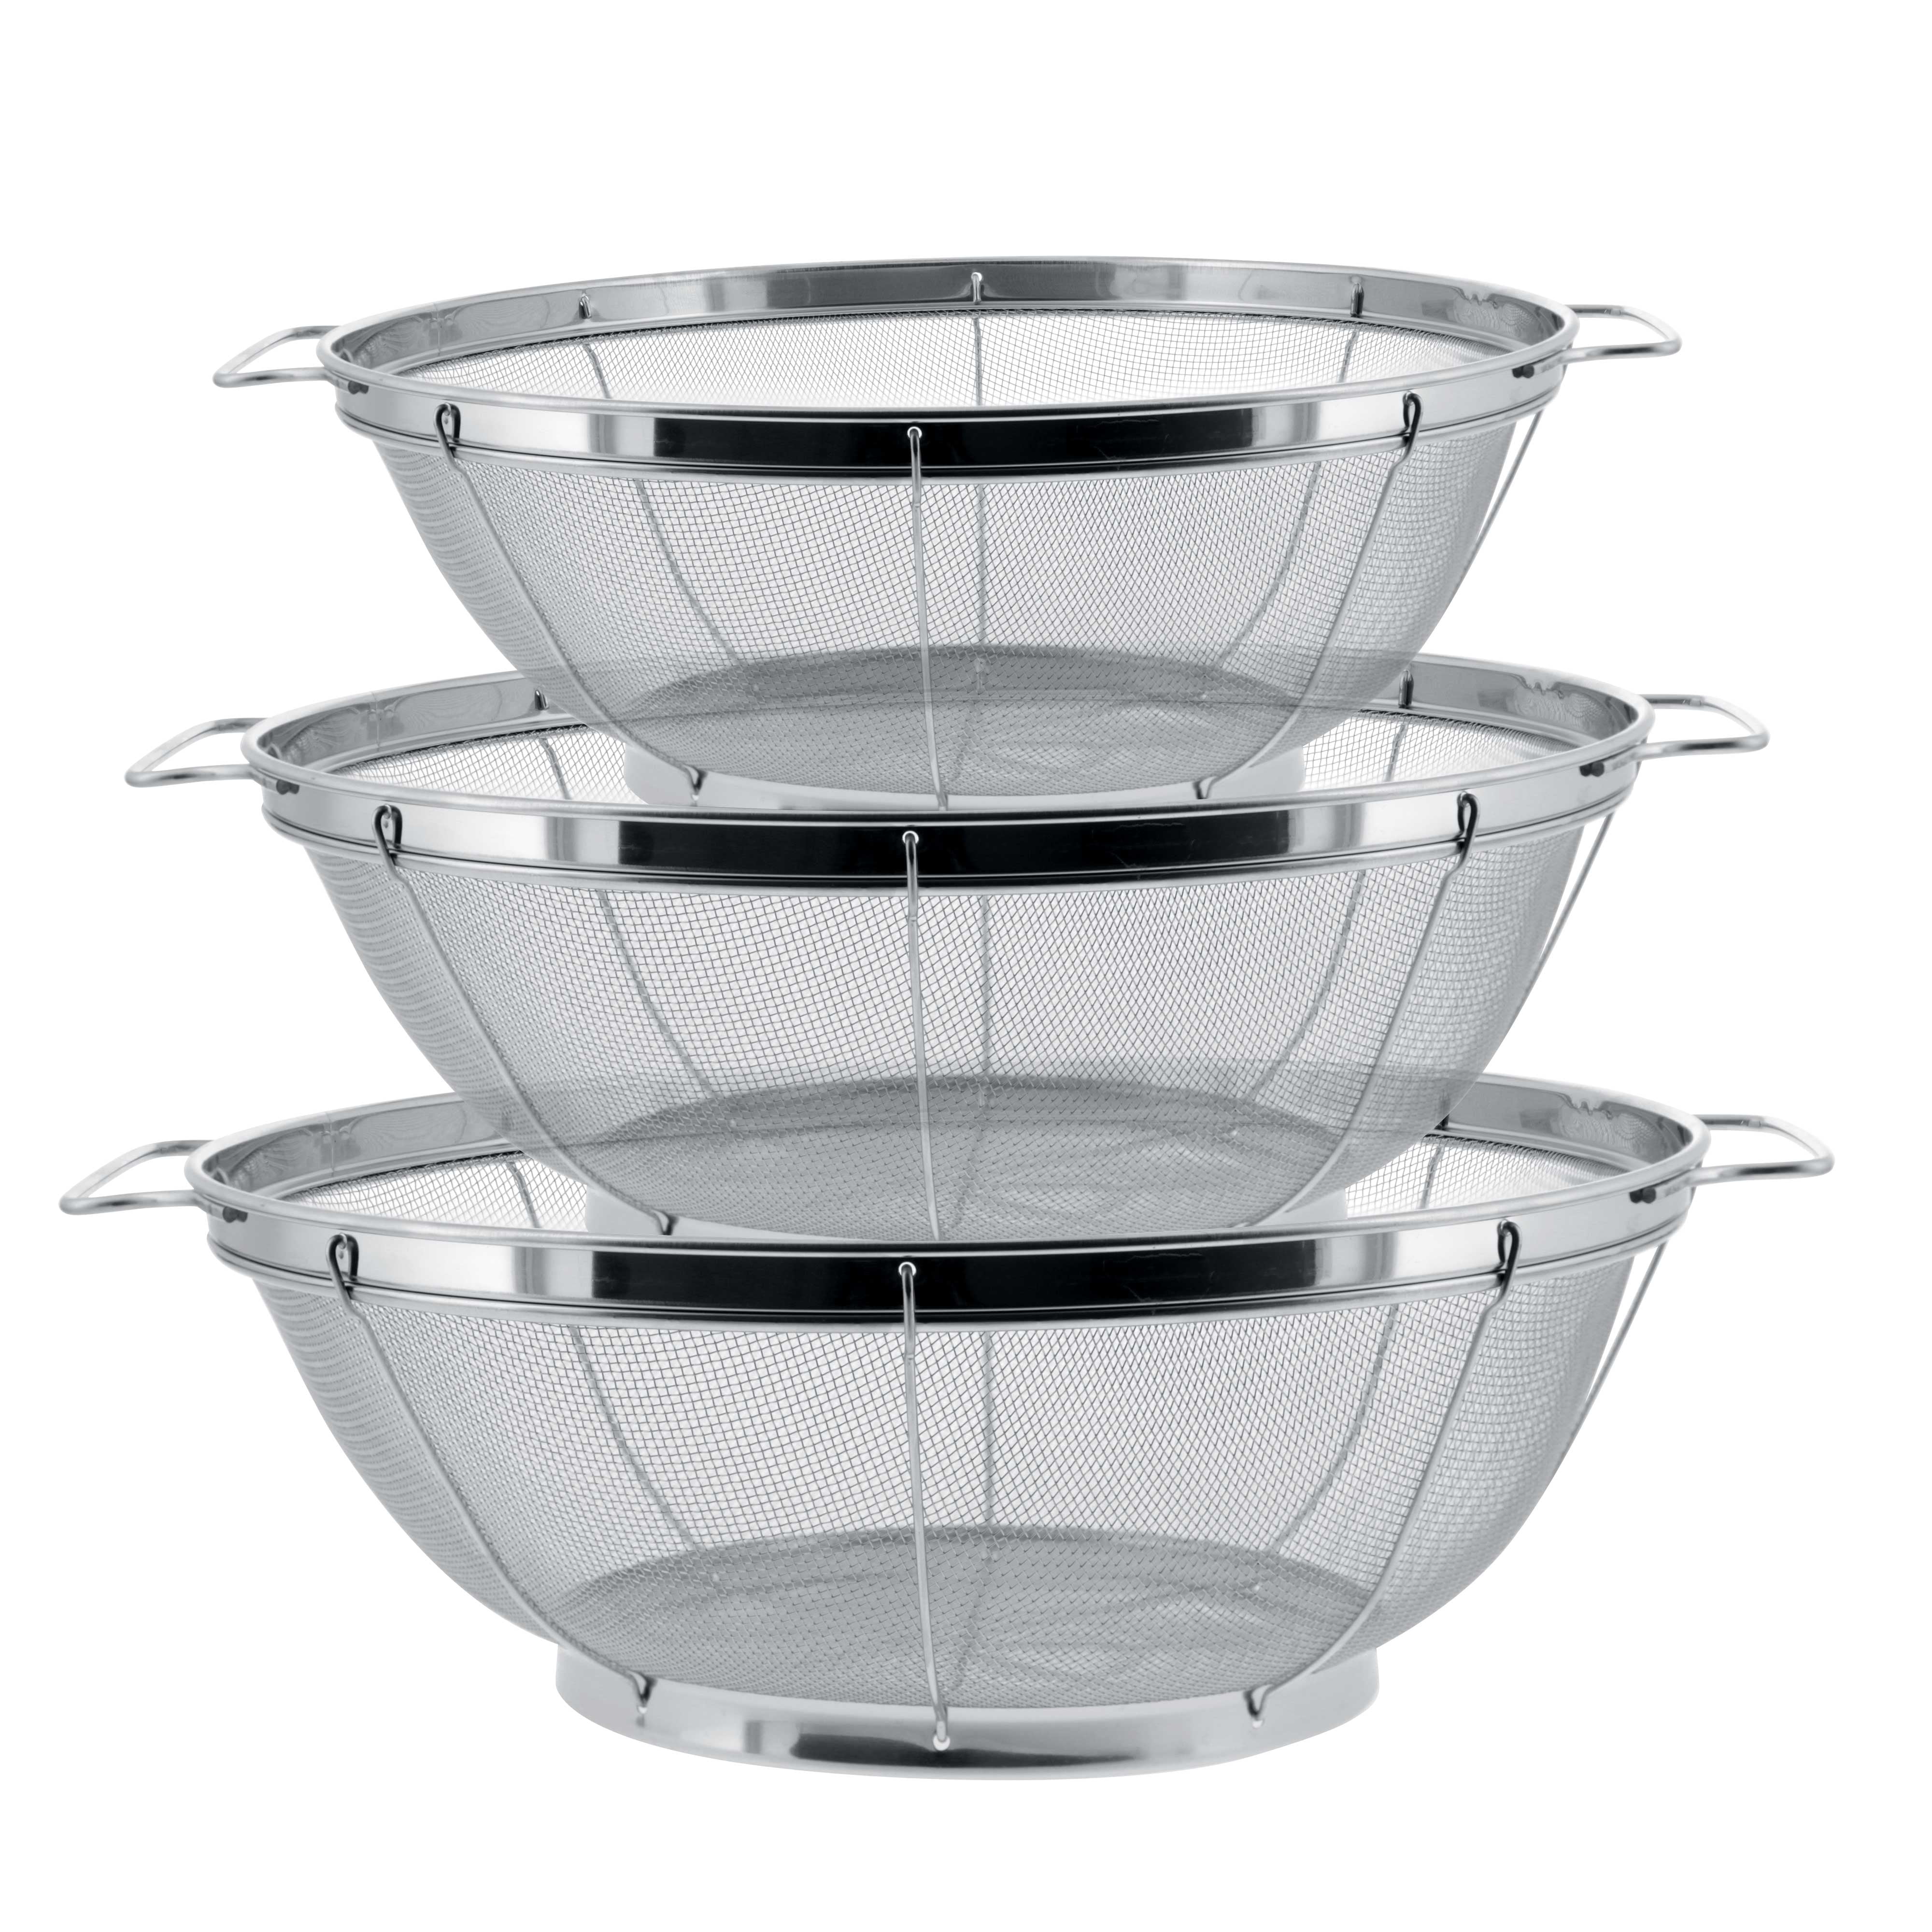 New Stainless Steel Strainer Colander Basket Deep Kitchen Colander Set Of 3 